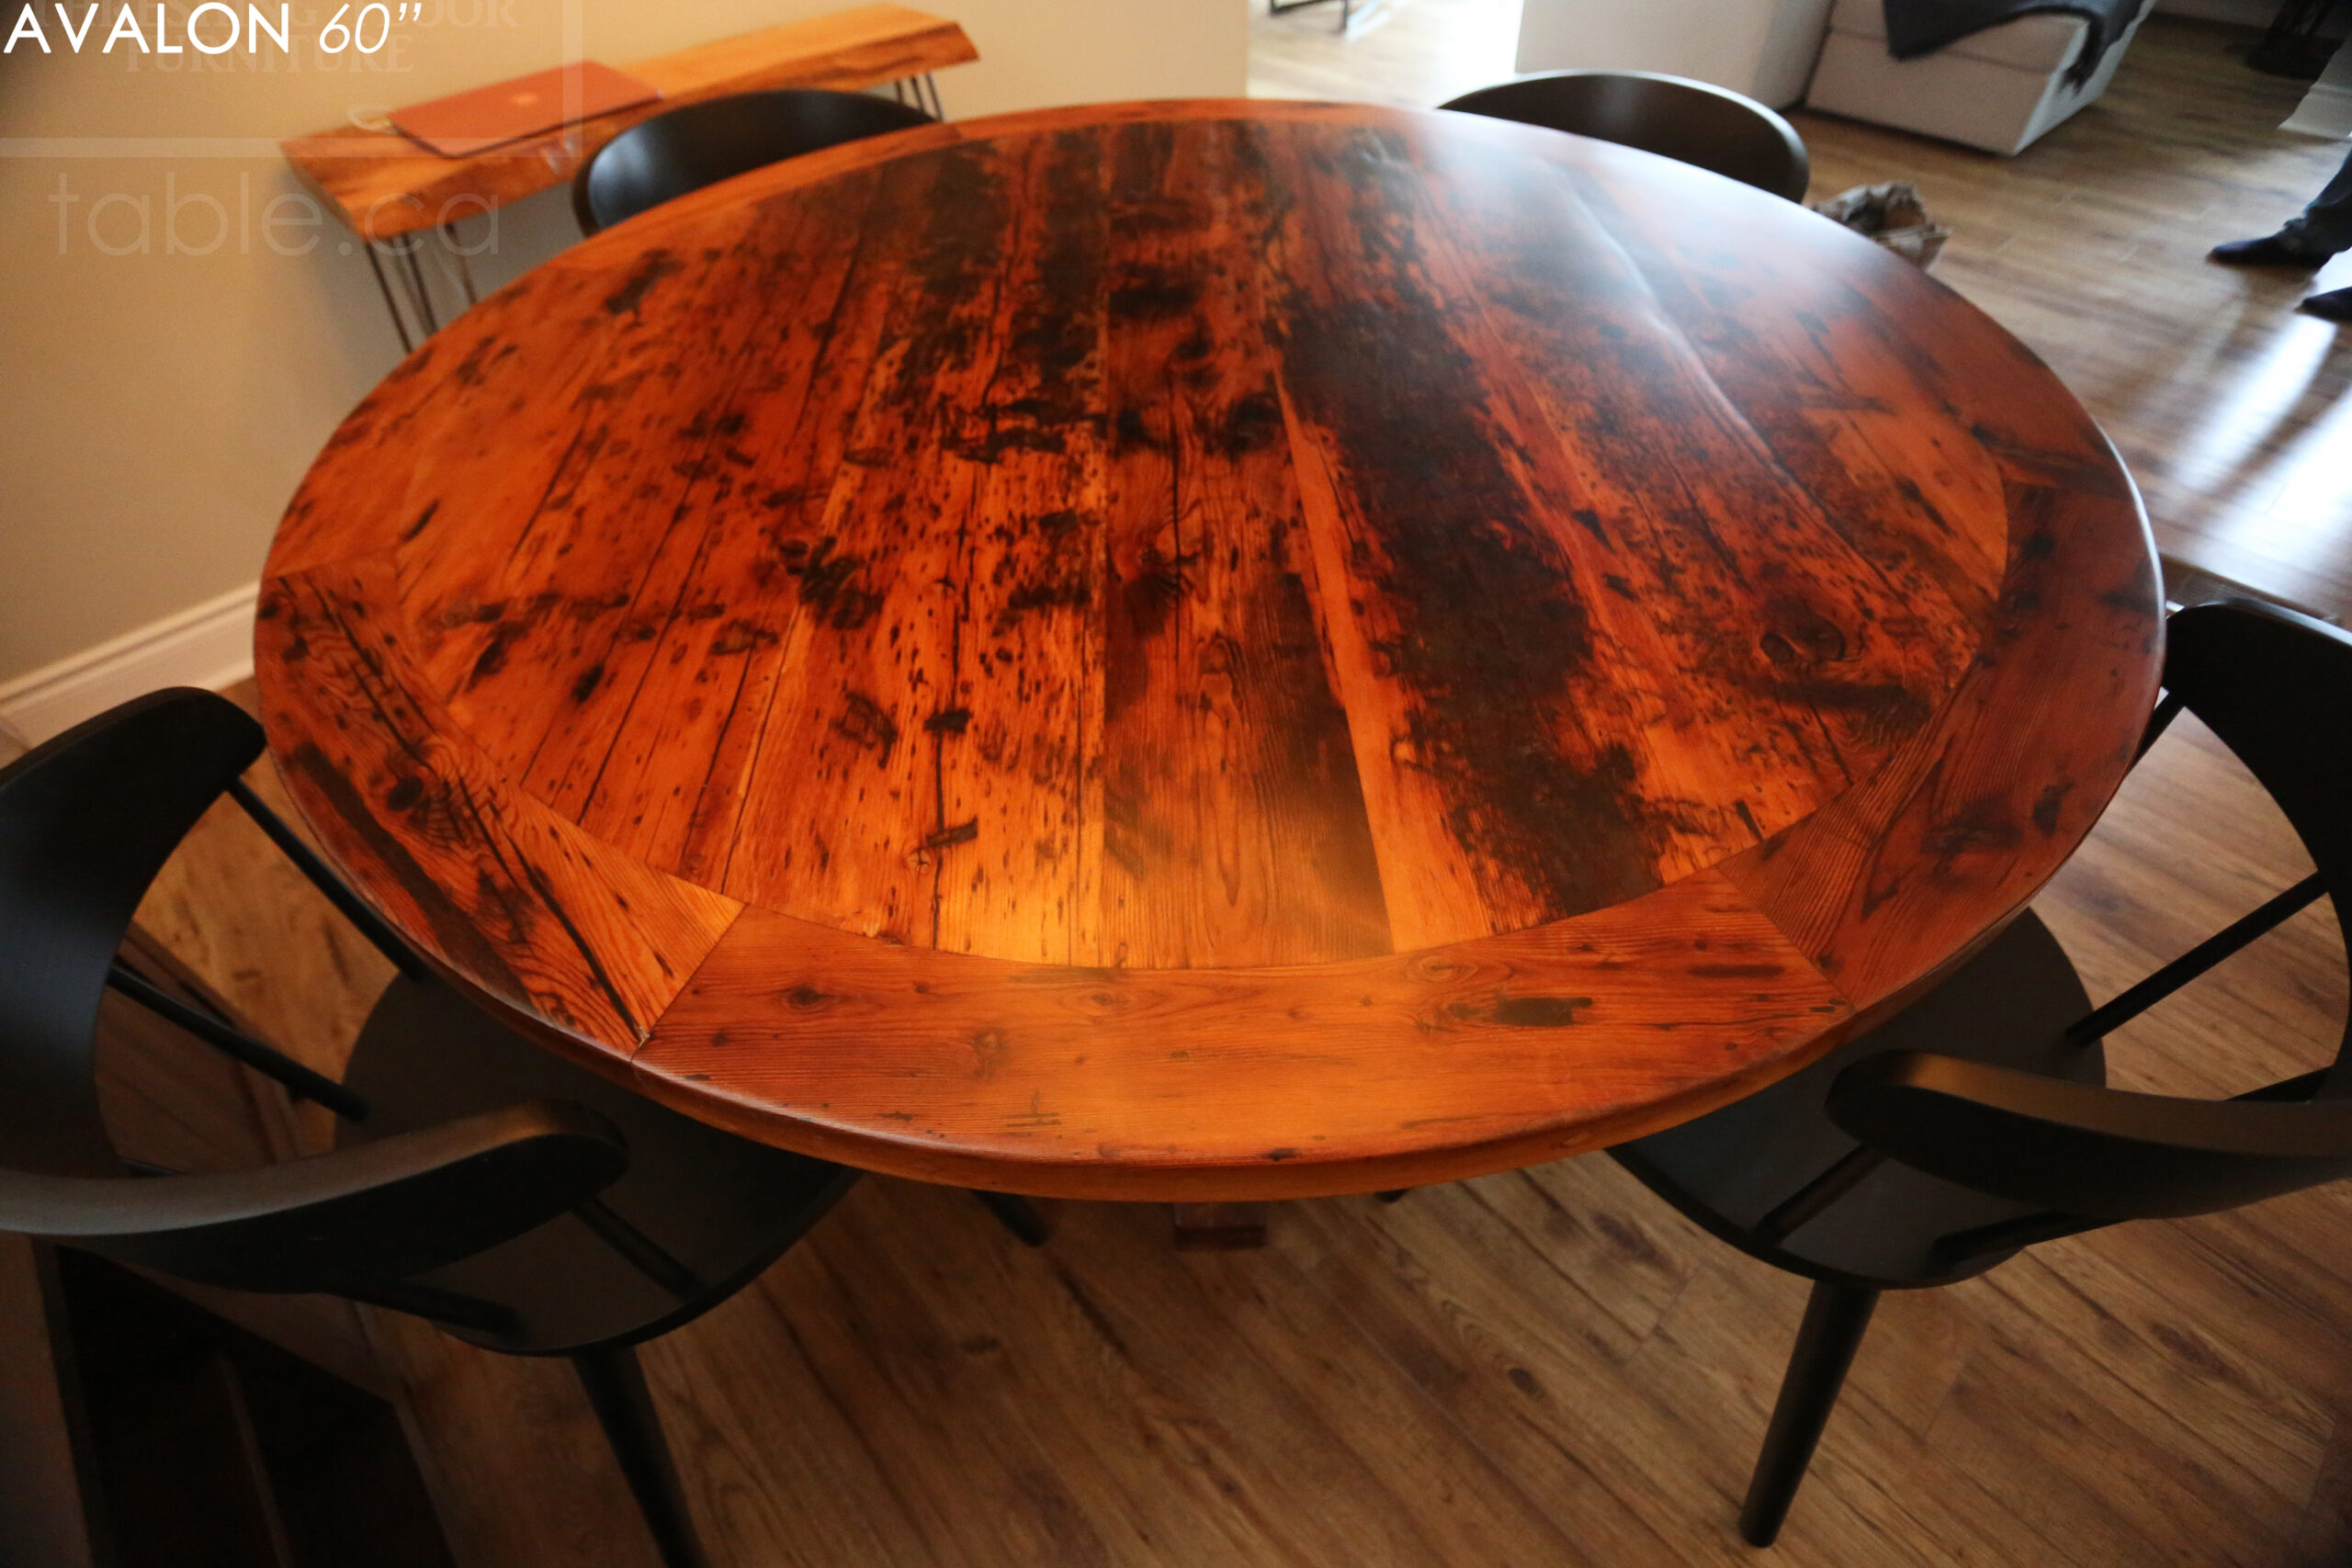 60" Round Reclaimed Wood Table - Hand-Hewn Beam Base - Hemlock Threshing Floor 2" Top - Original edges & distressing maintained - Premium epoxy clearcoat [medium thickness] + satin polyurethane finish - www.table.ca